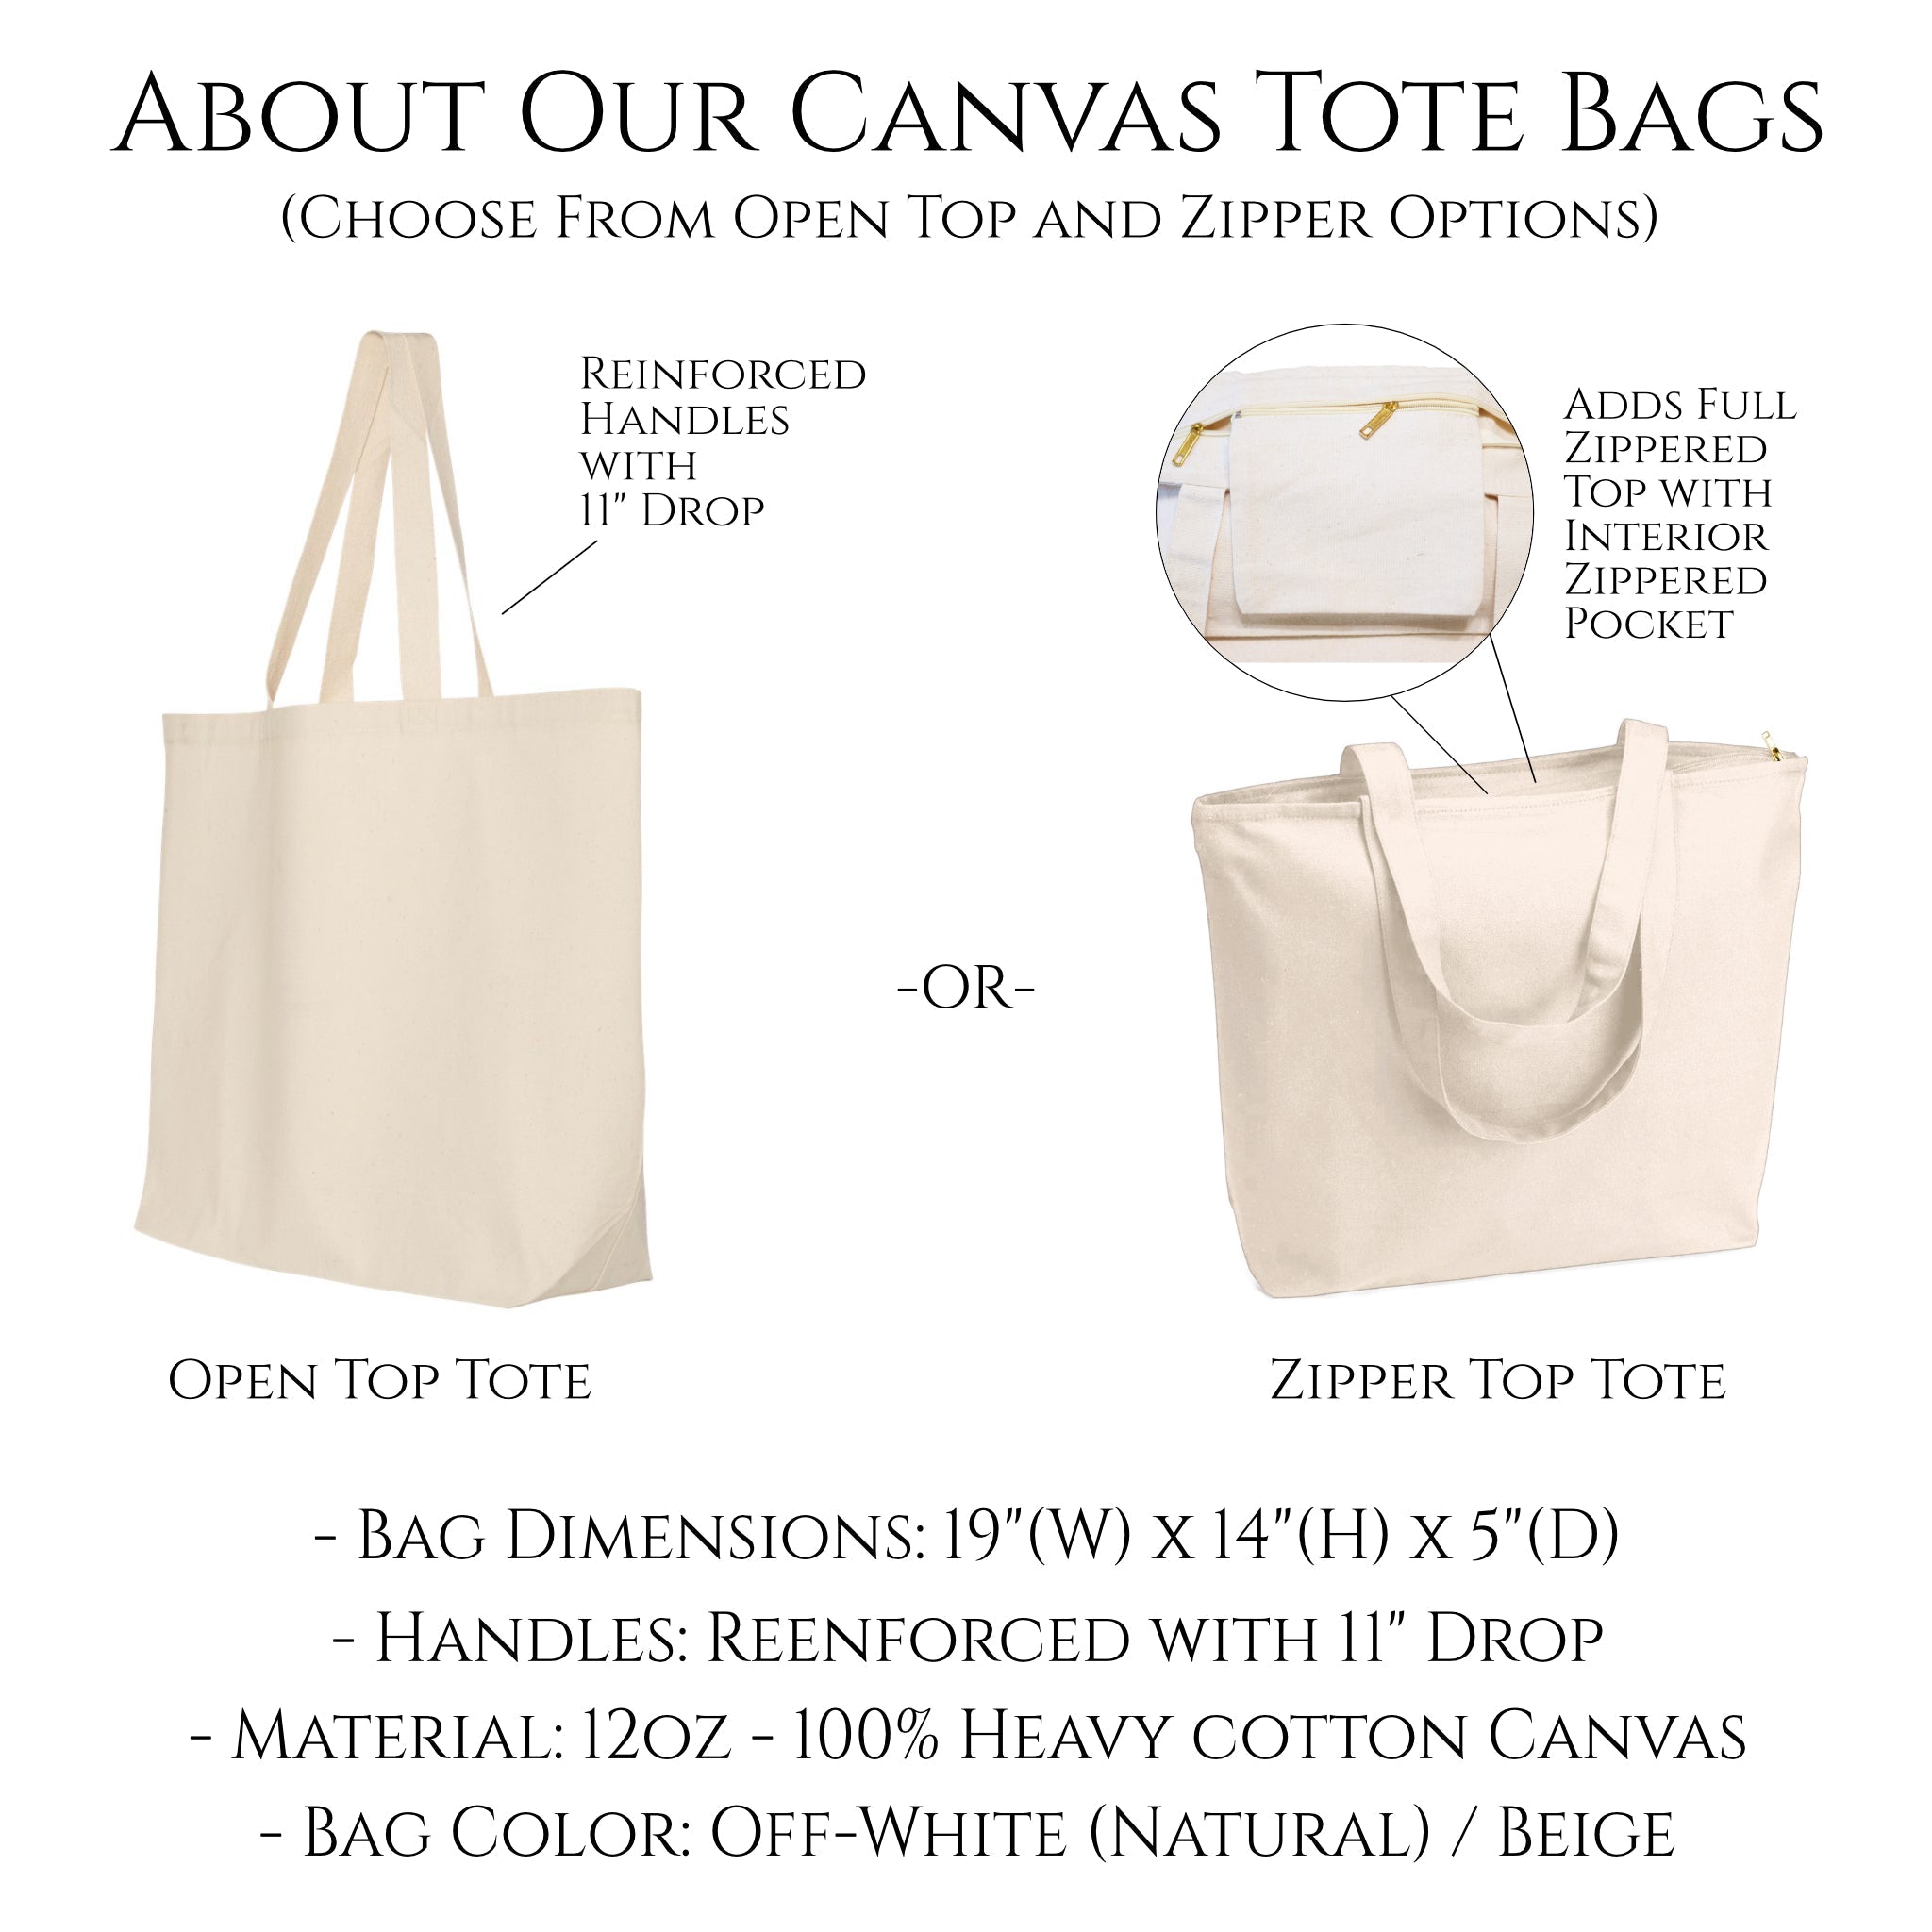 mala tote bag - medium size tote bag with zipper closure